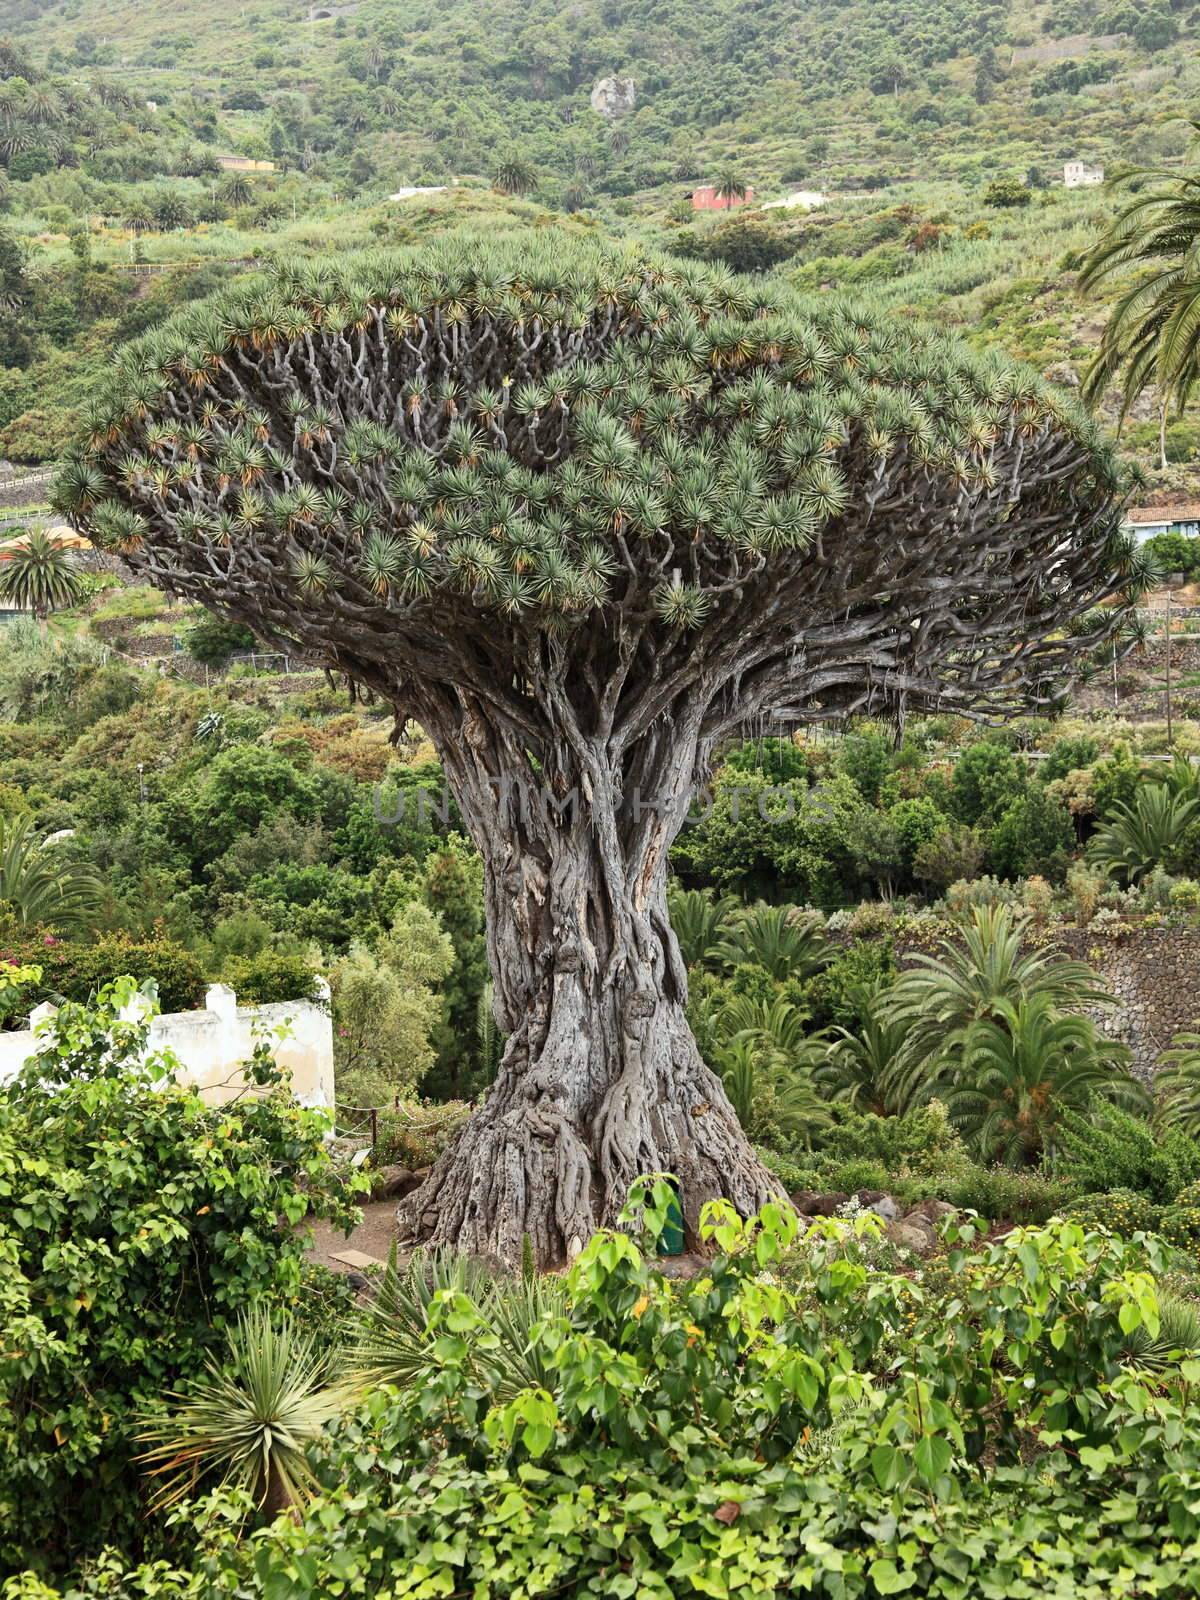 Dragon tree - Tenerife by Maridav